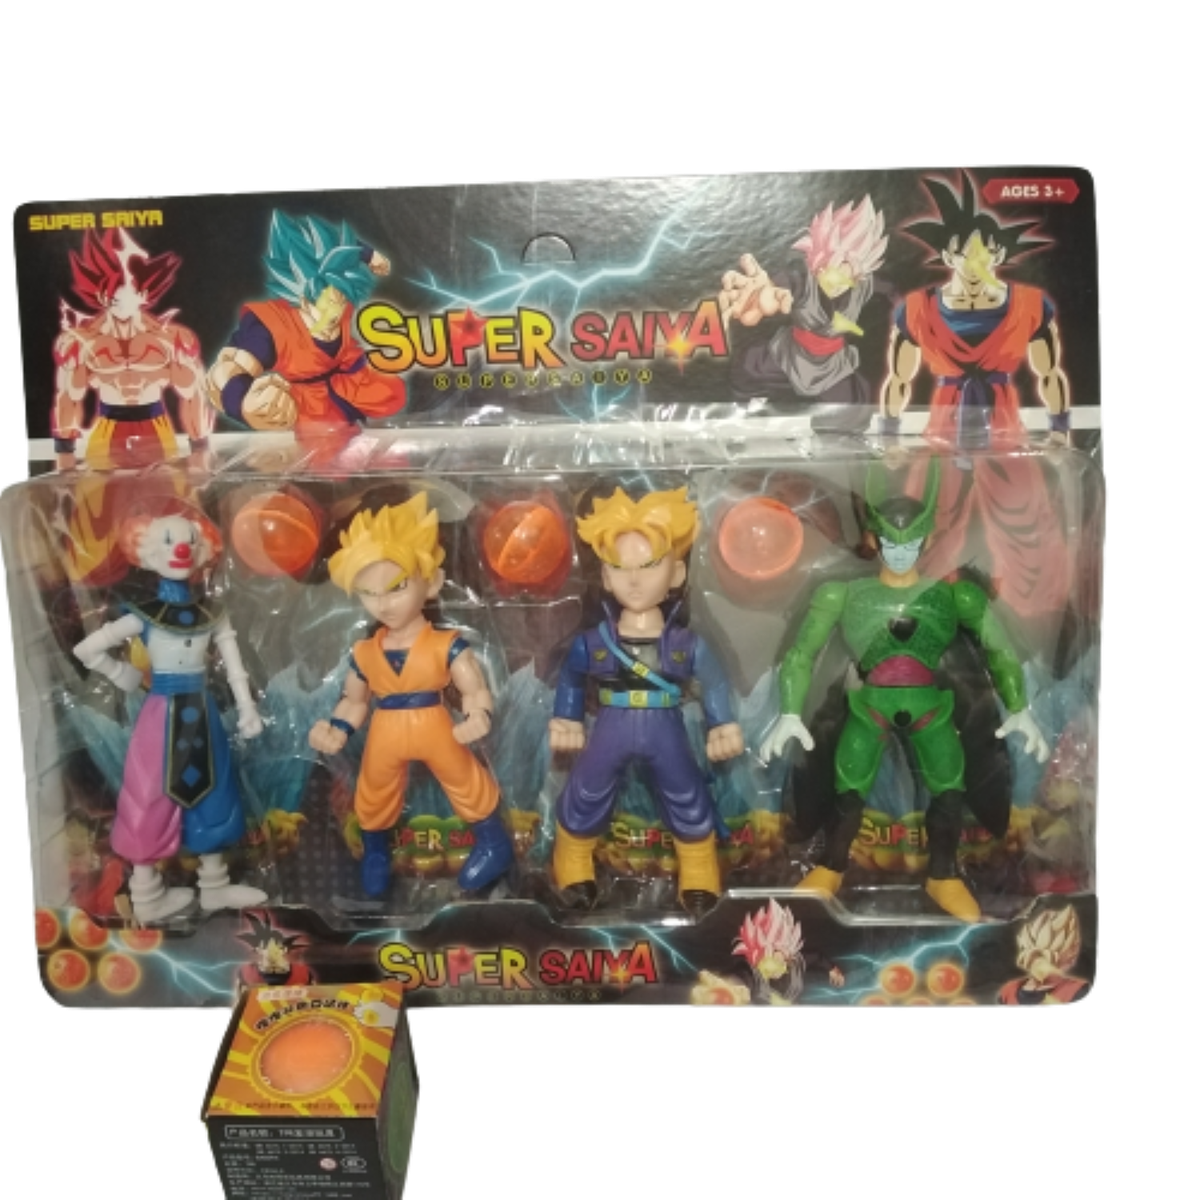 14 cm Super Saiya Dragon Ball Z Toys With Tofu Ball | Buy Online in ...